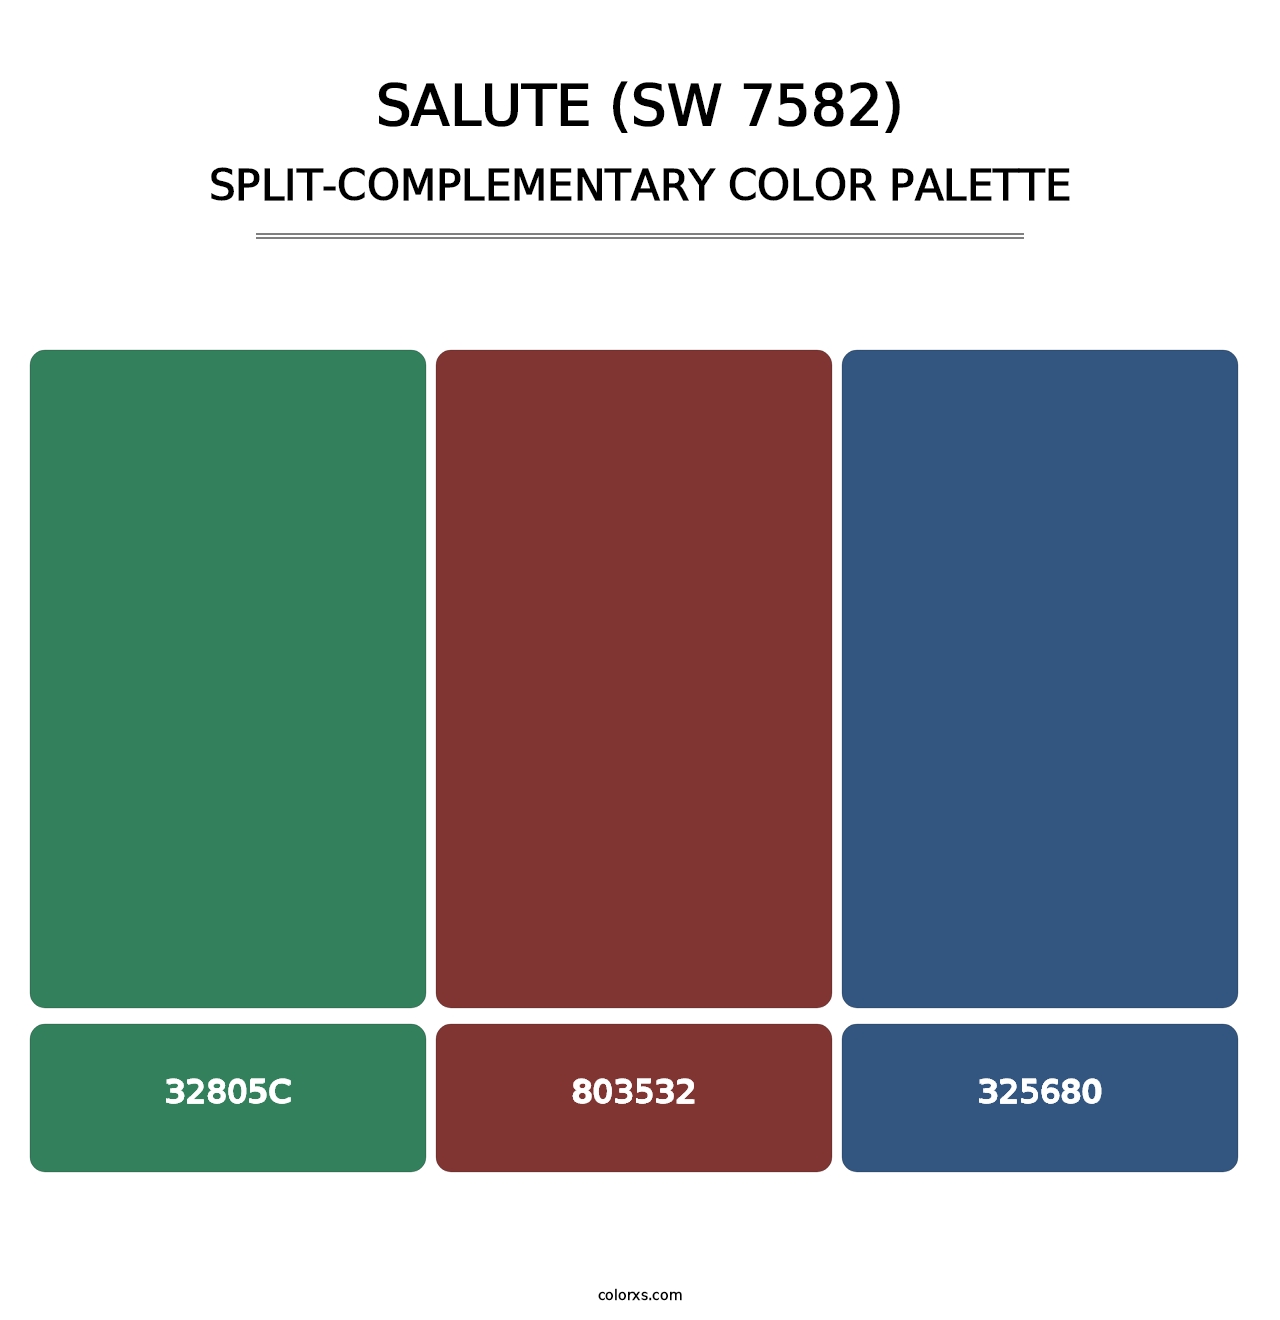 Salute (SW 7582) - Split-Complementary Color Palette